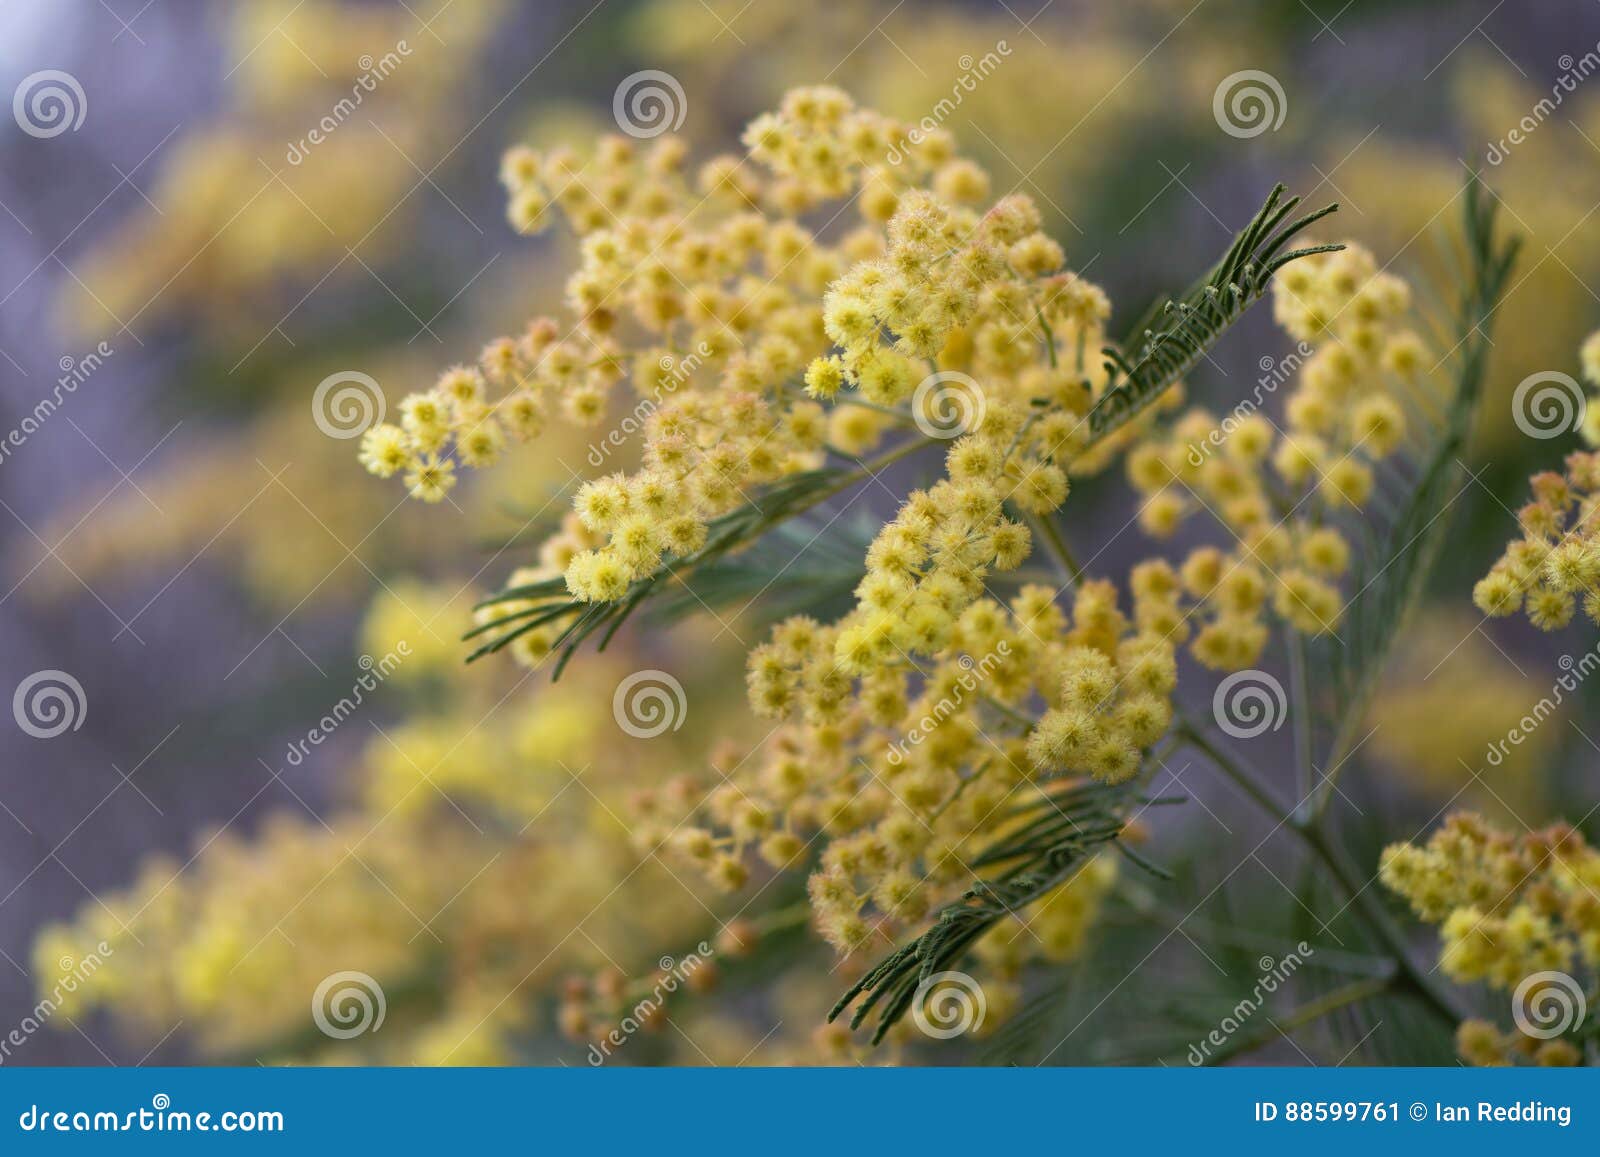 Silver Wattle Acacia Dealbata Yellow Flowers And Foliage Stock Image Image Of Flora Dealbata